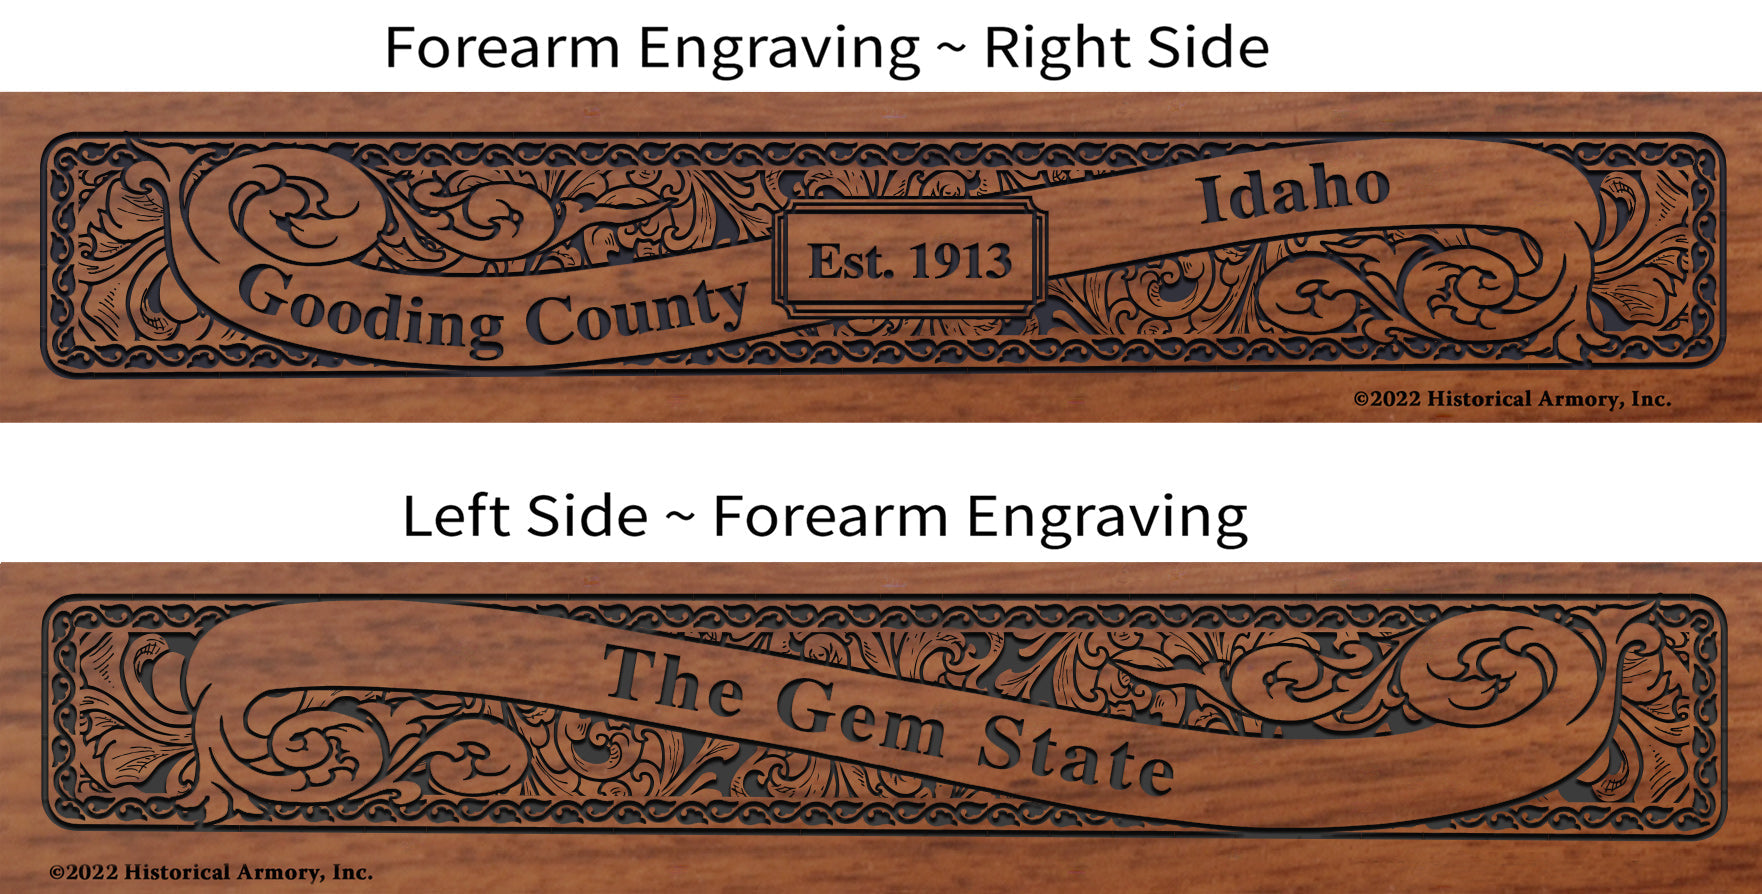 Gooding County Idaho Engraved Rifle Forearm